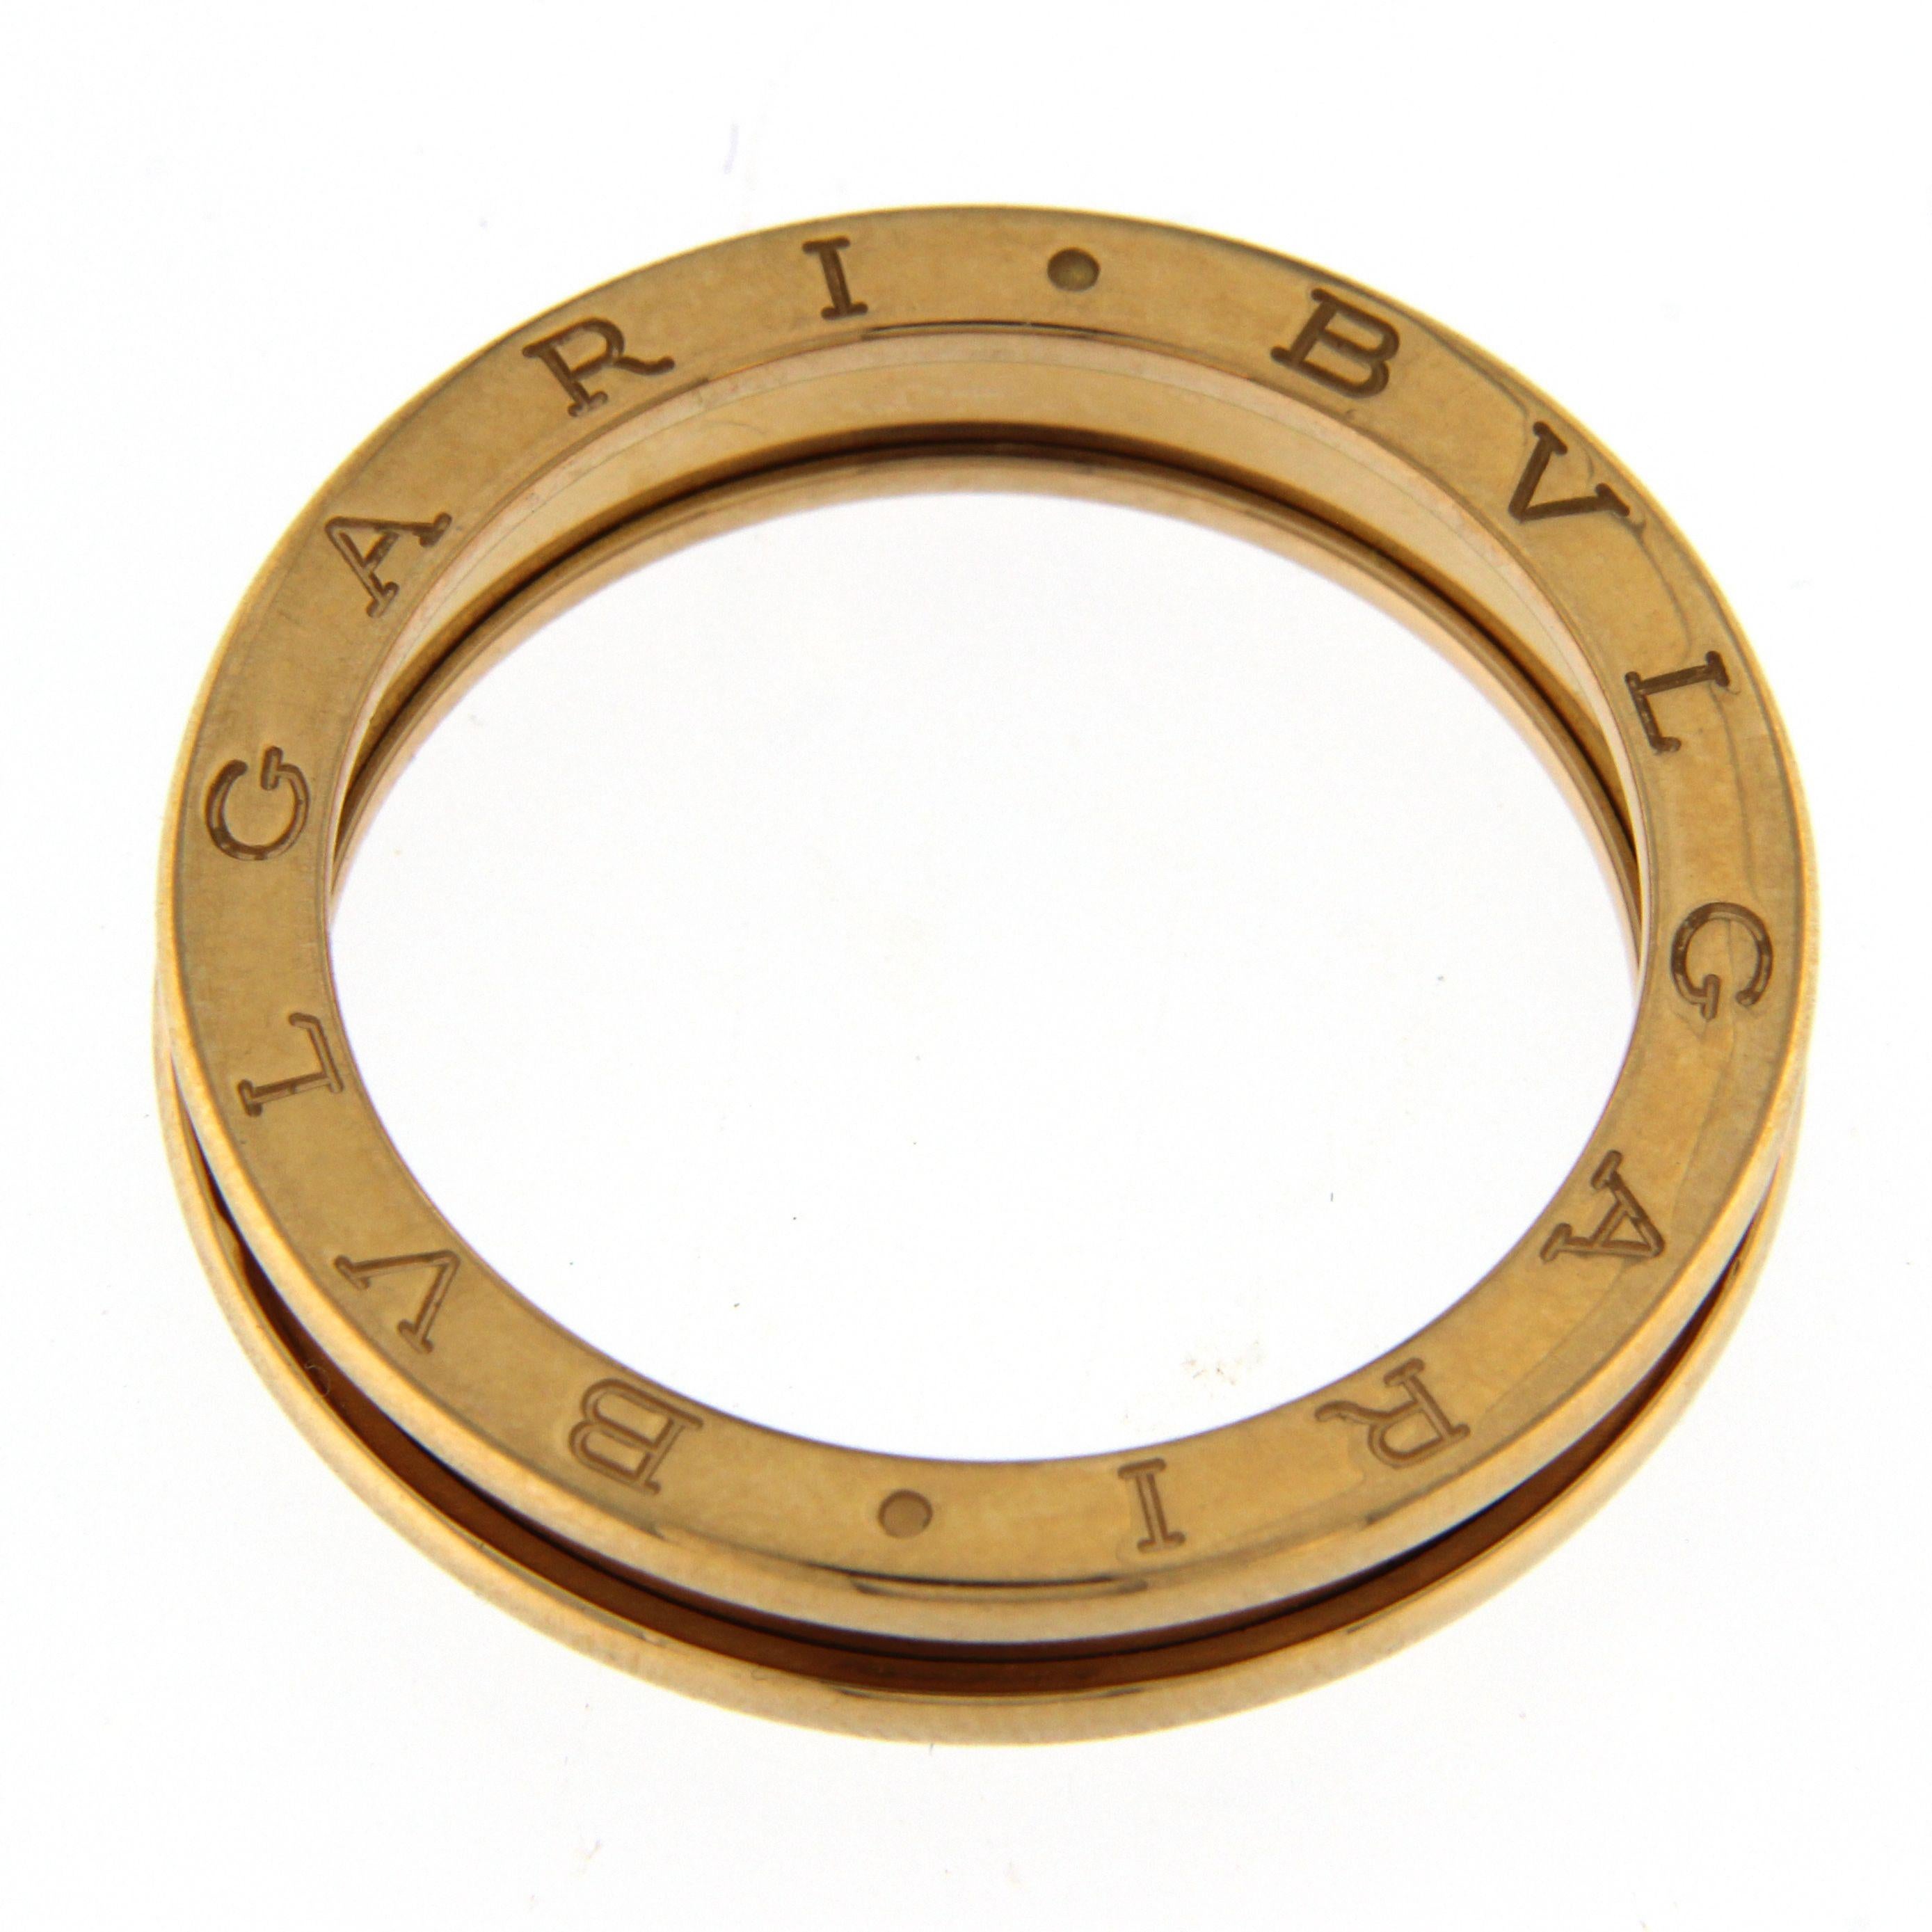 BZERO1 ring 18kt pink gold       size 64       1 Band